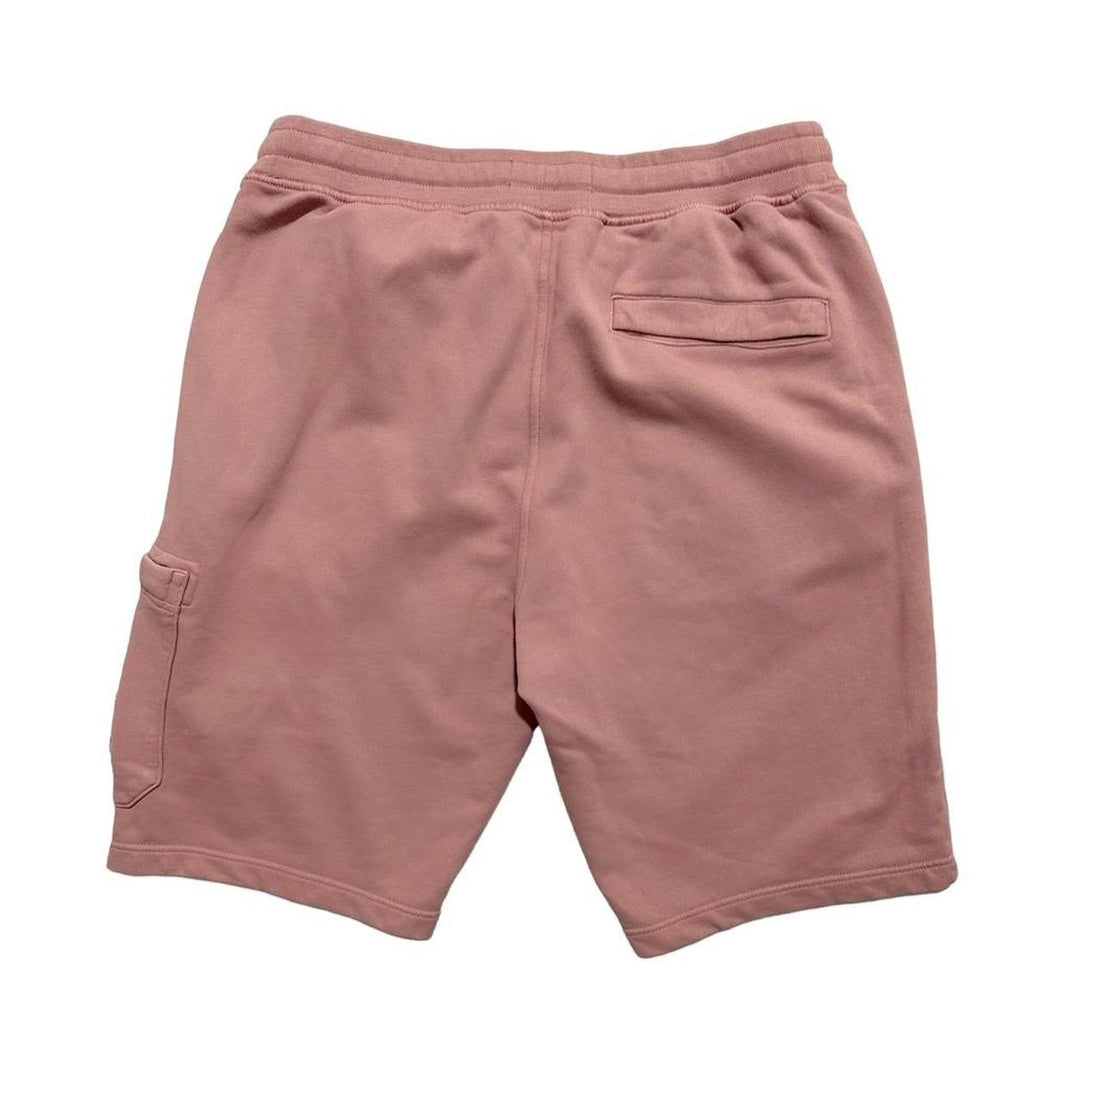 Stone Island Pink Sweatpants Shorts